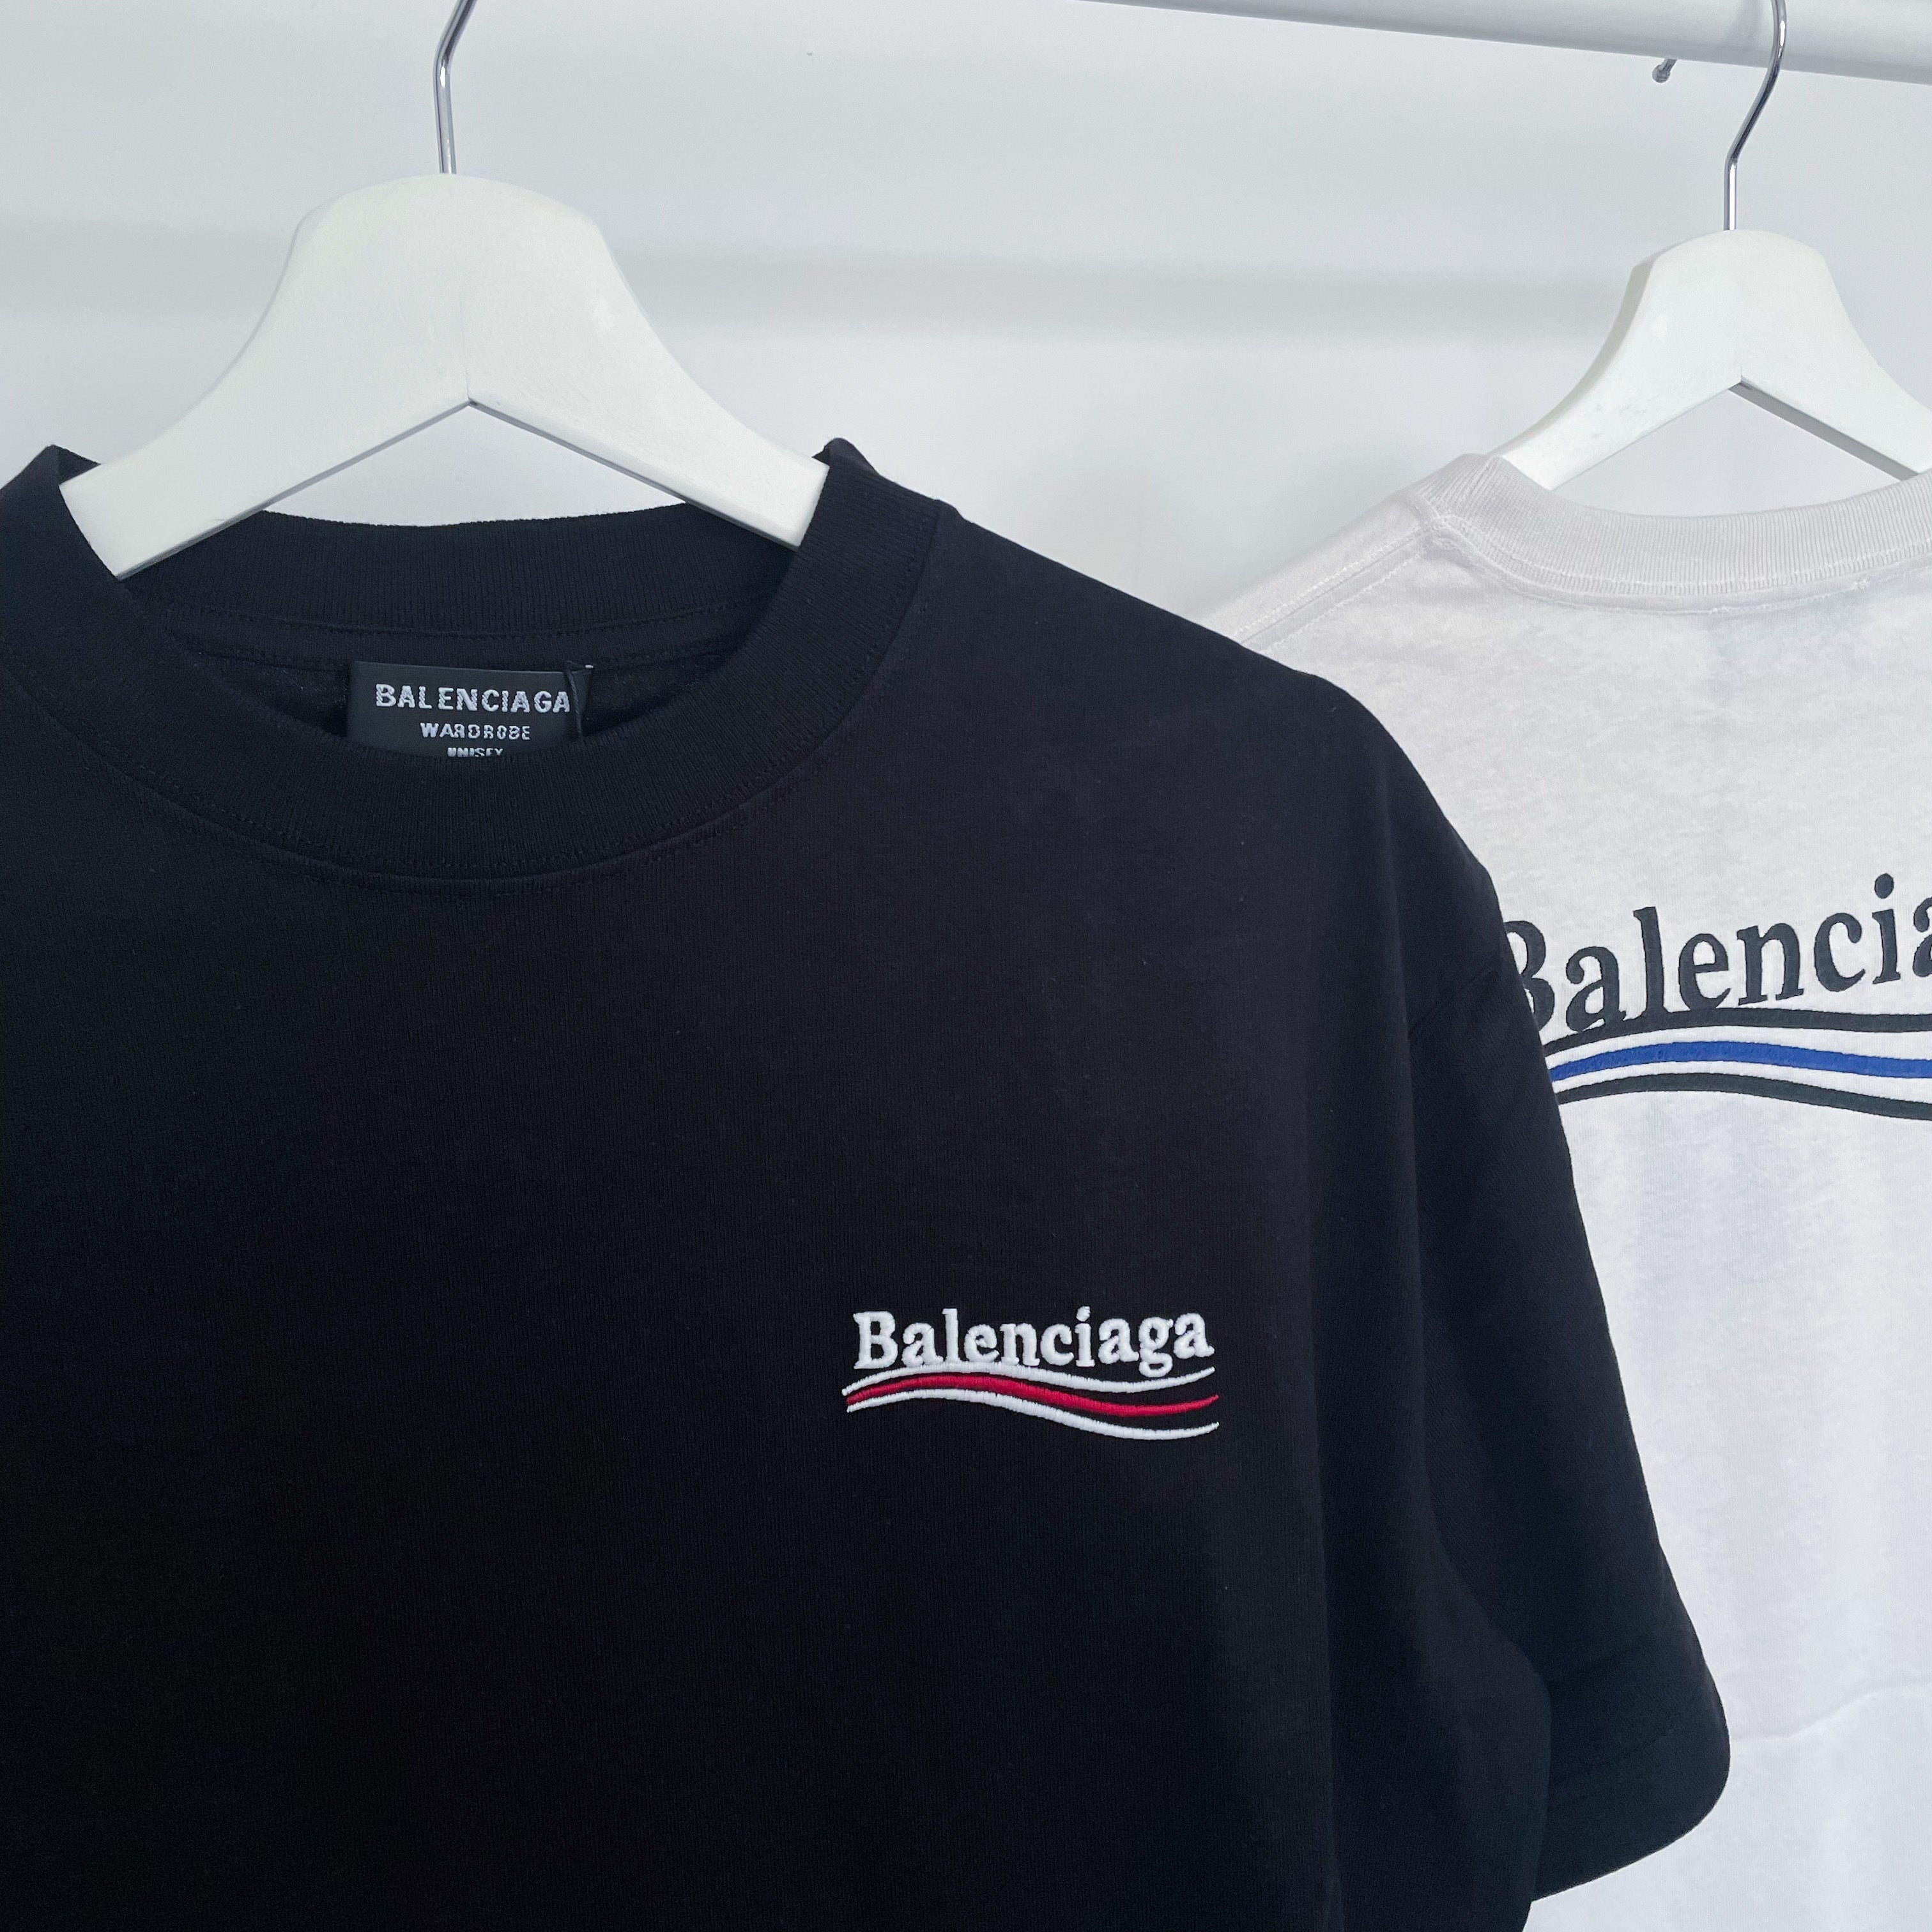 Balenciaga Embroidered Campaign Tee - Black